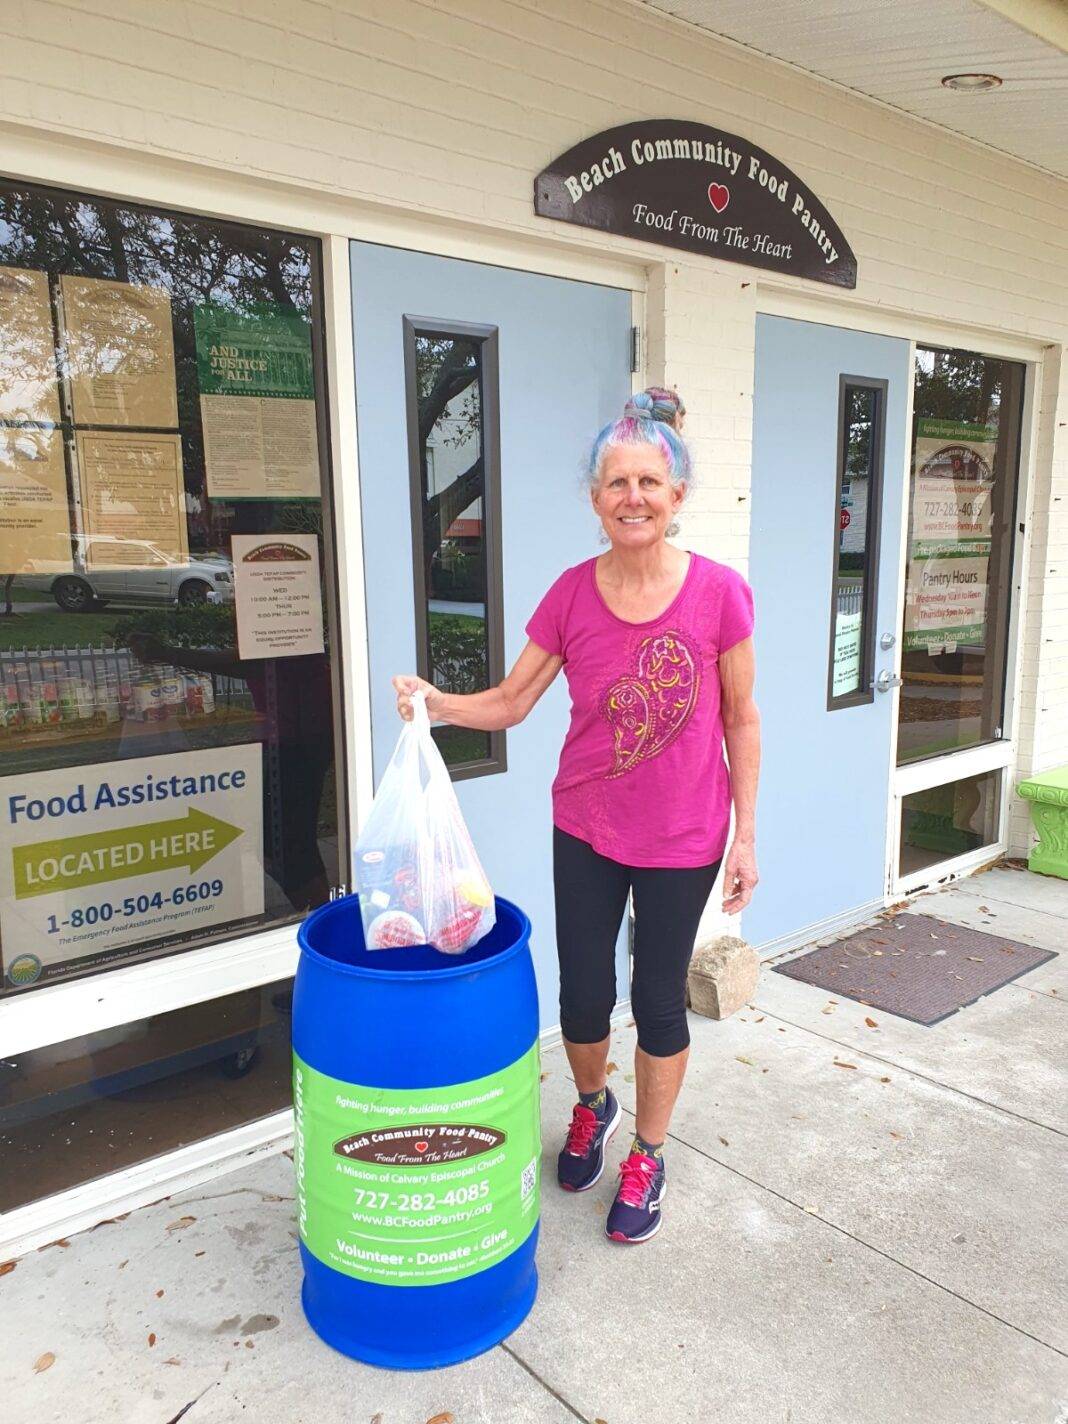 Diane Daniel donates to the community food pantry